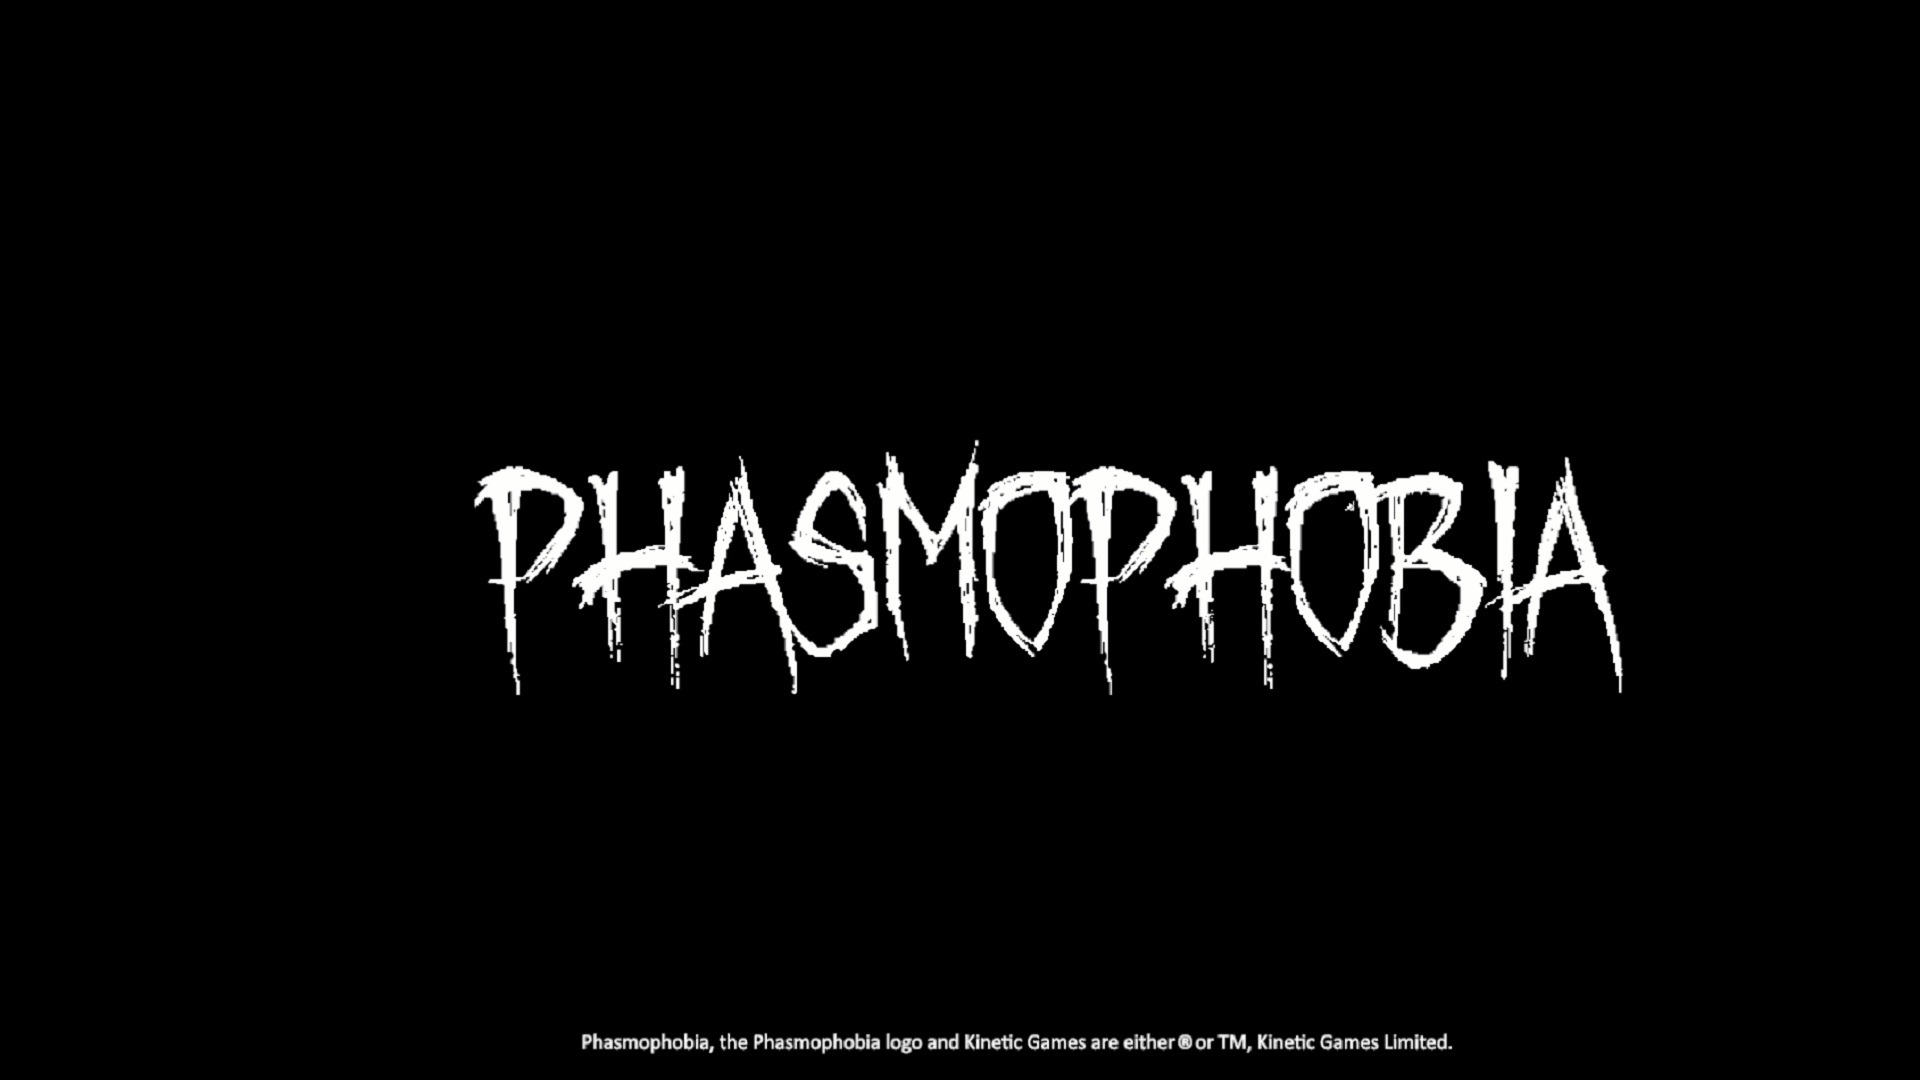 команды для разговора phasmophobia фото 70